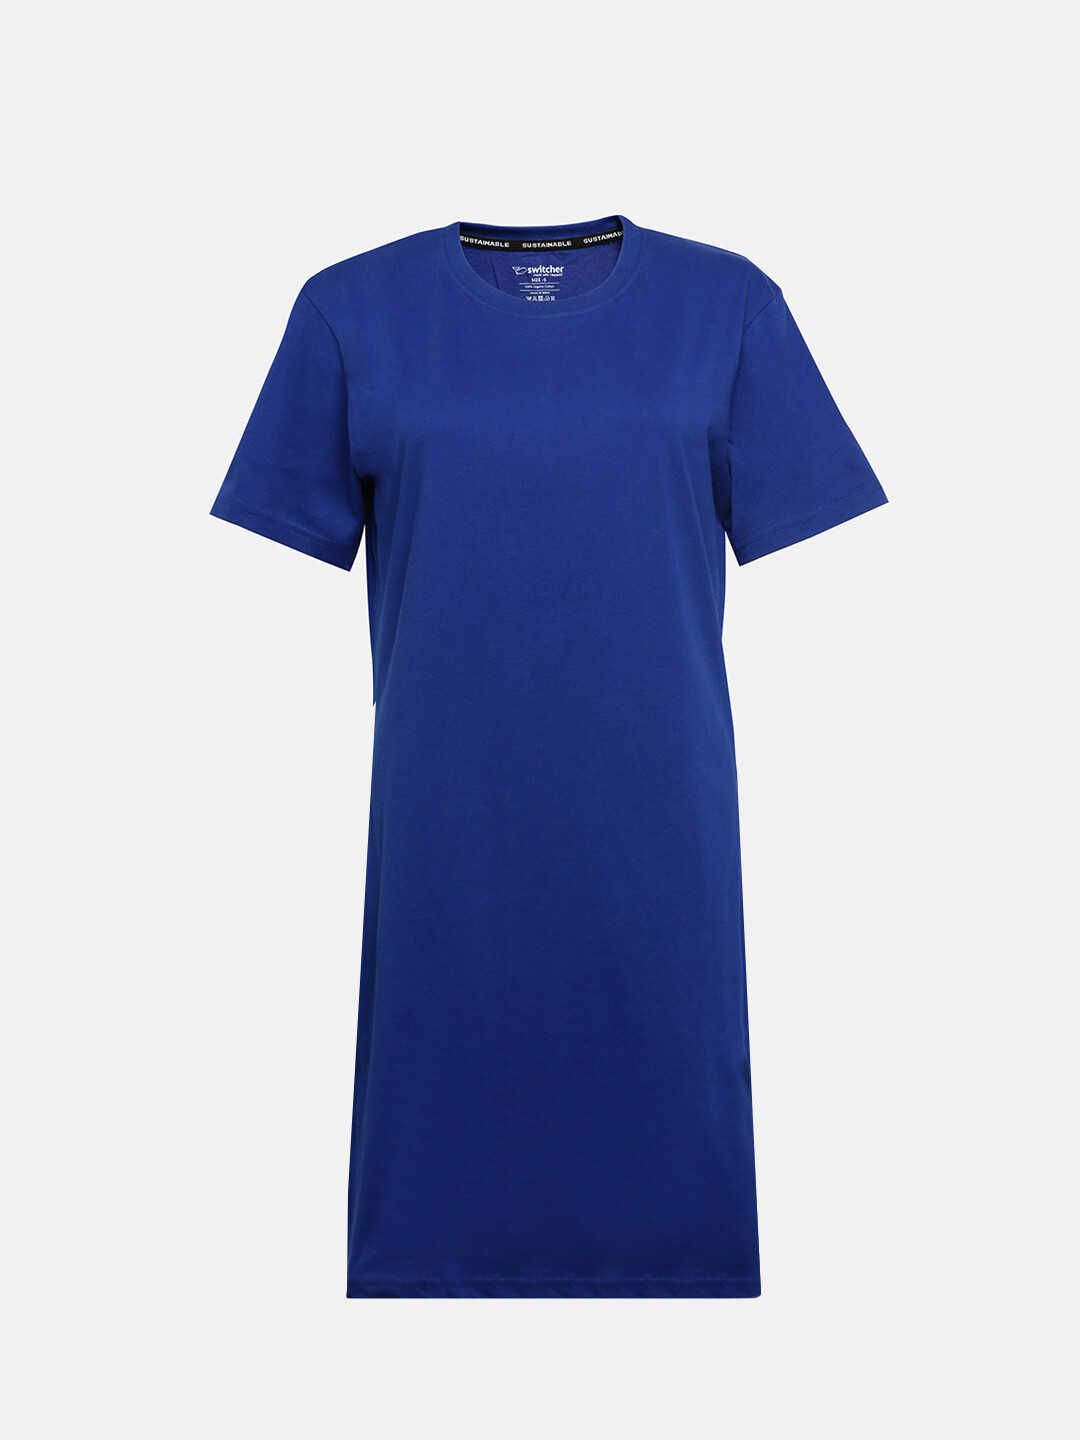 Damen T-Shirt Kleid Liz, Farbe: Ocean 259